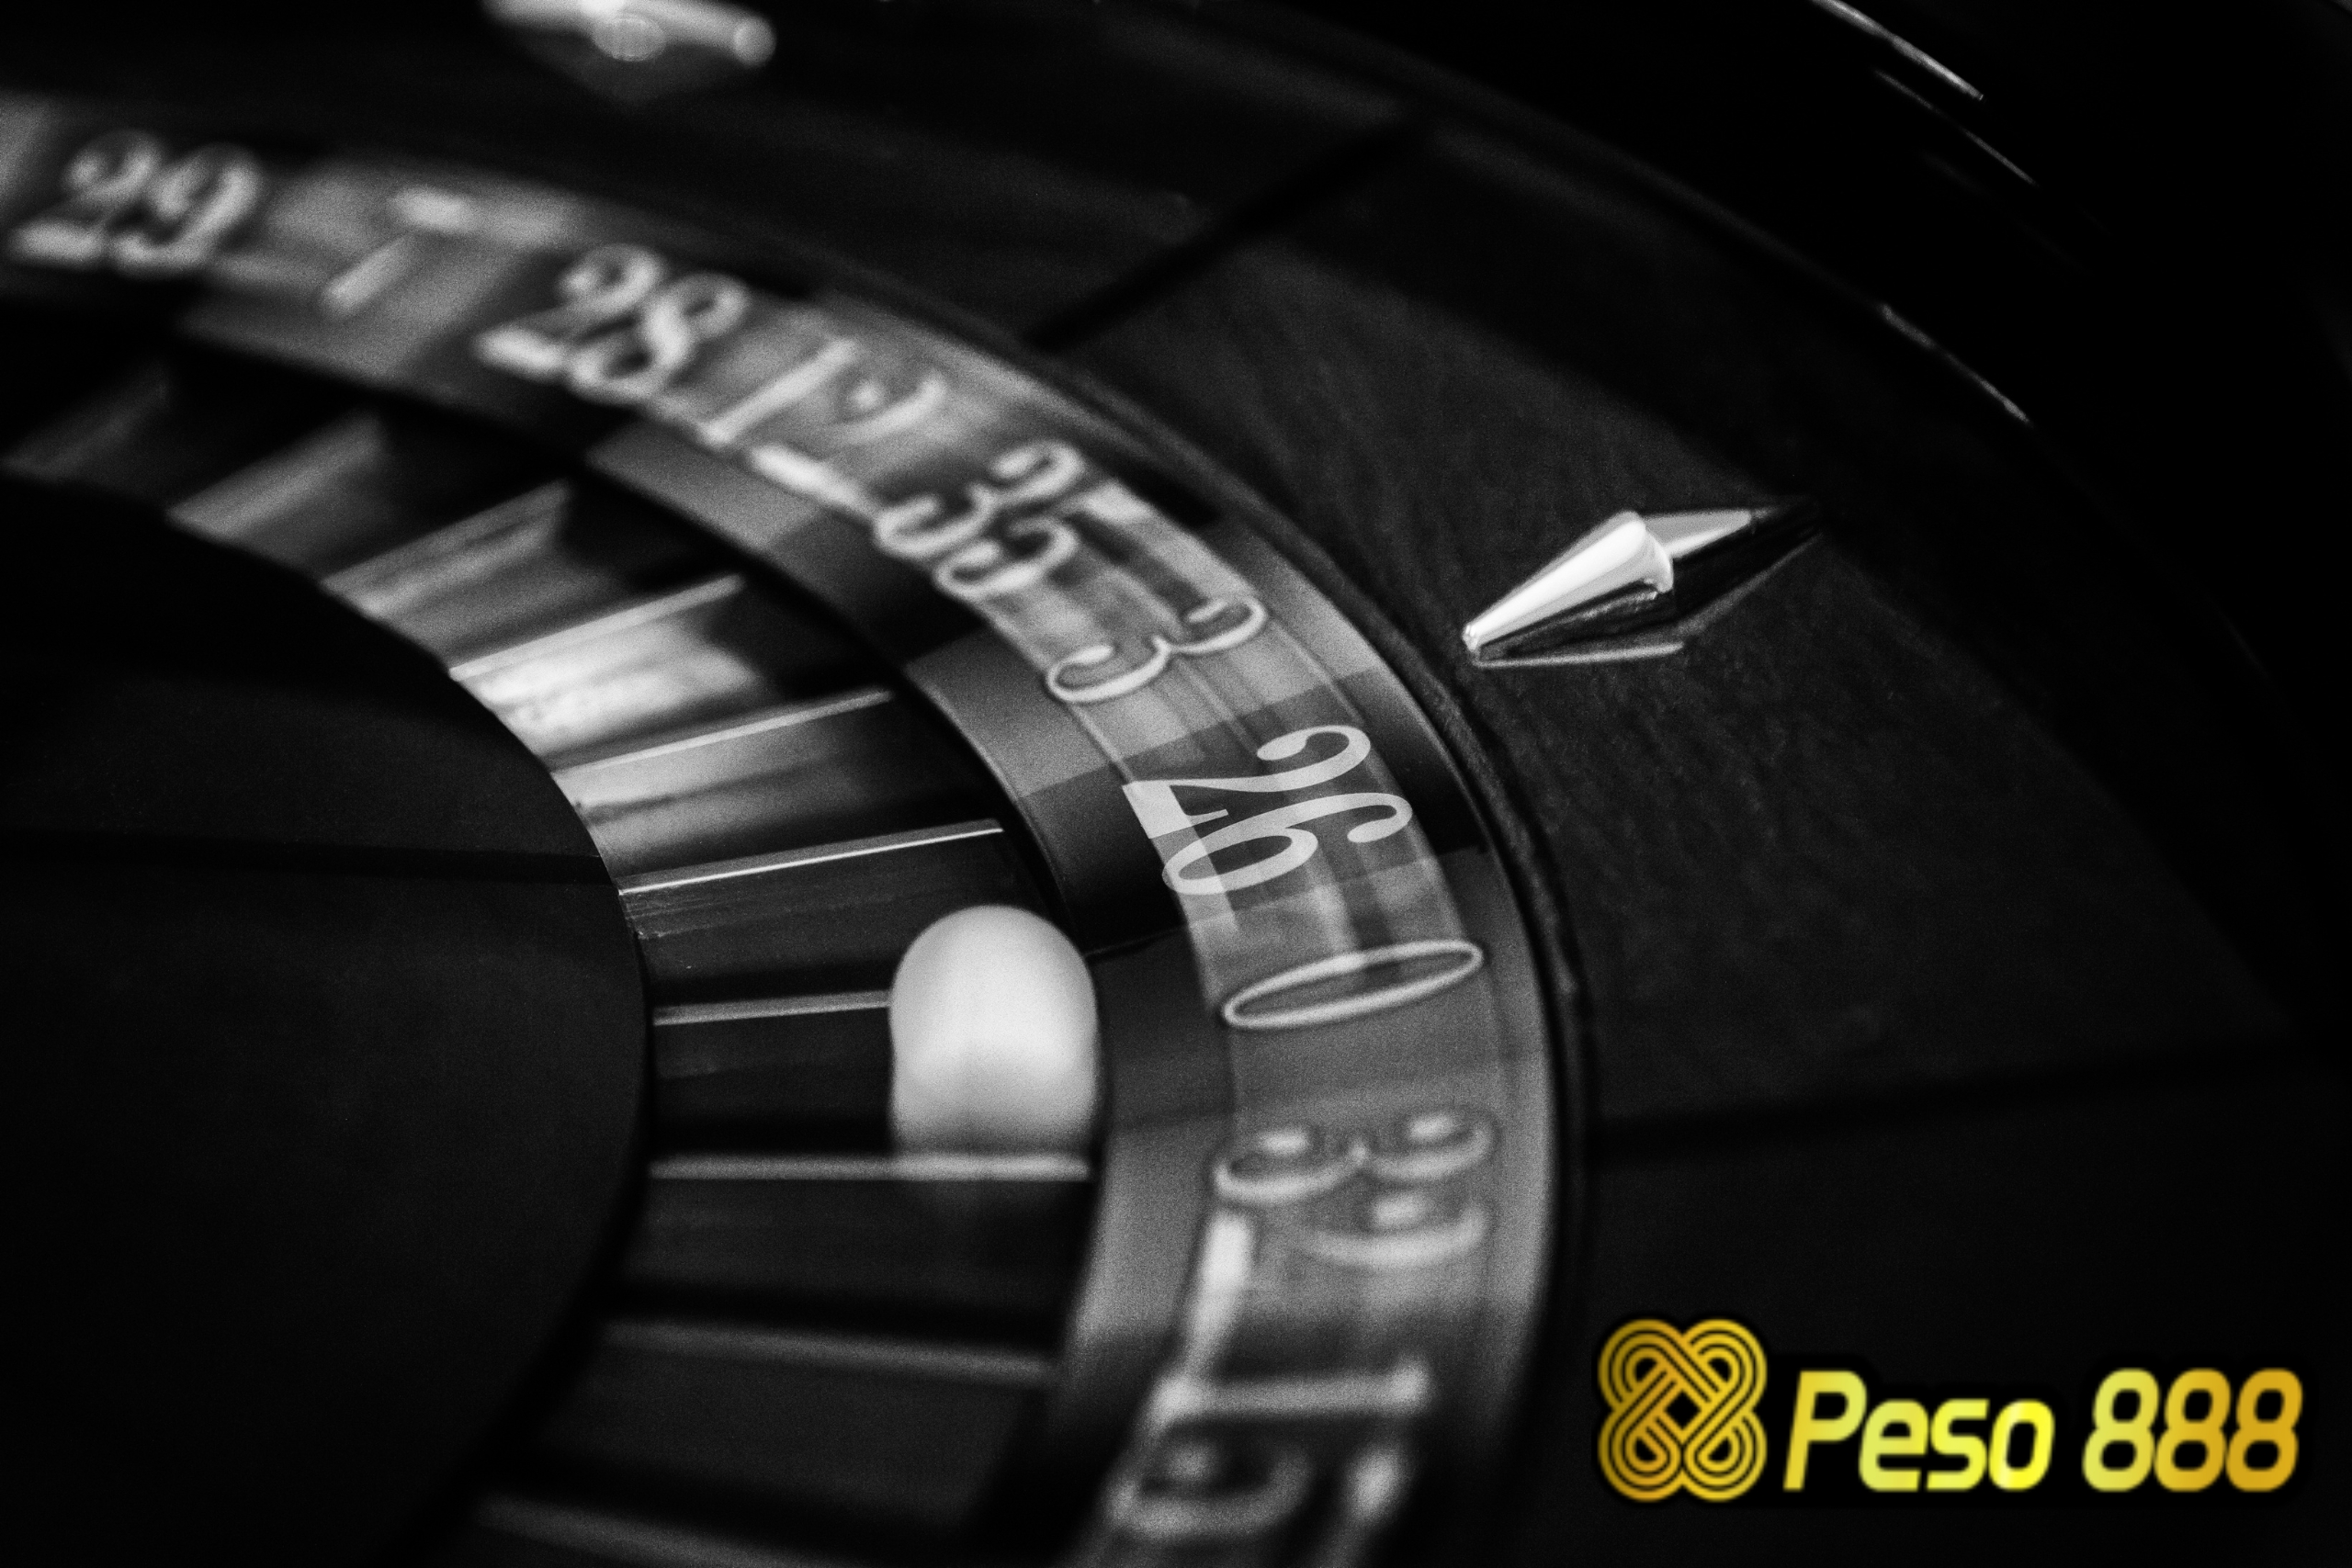 Peso888: Your Gateway To Winning Big Online!